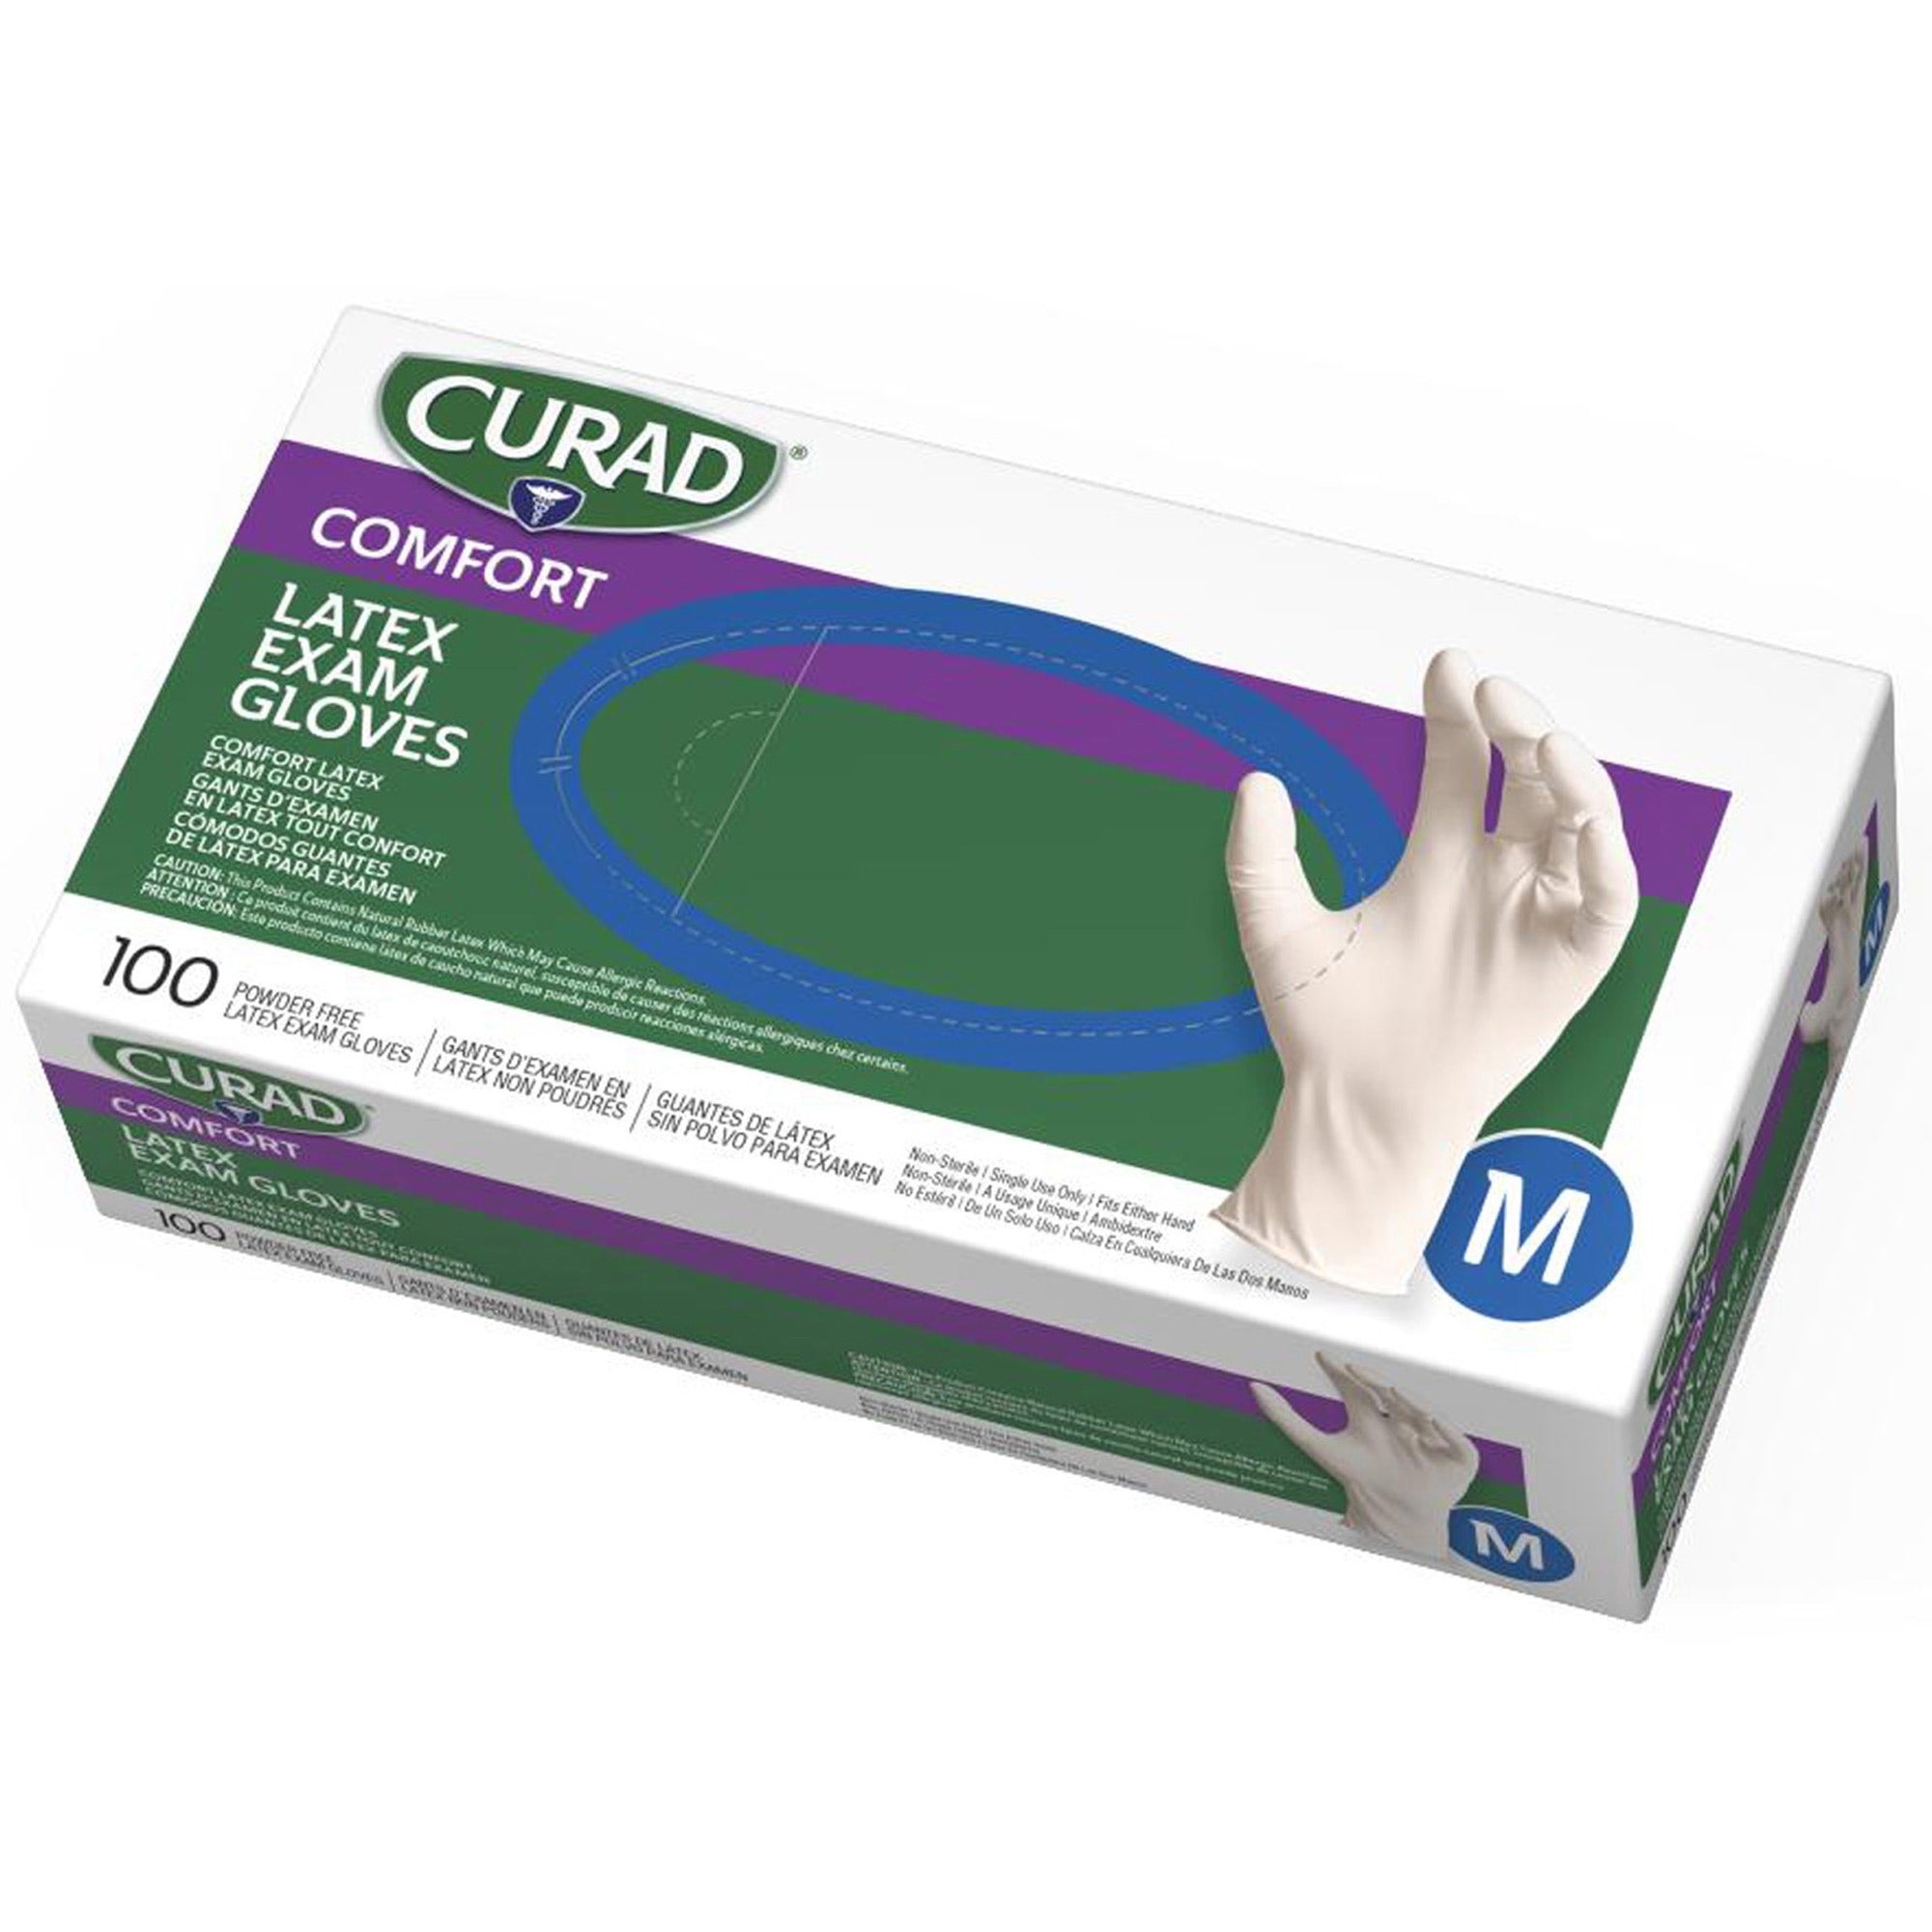 curad-powder-free-latex-exam-gloves-medium-size-white-textured-for-healthcare-working-100-box_miicur8105 - 1